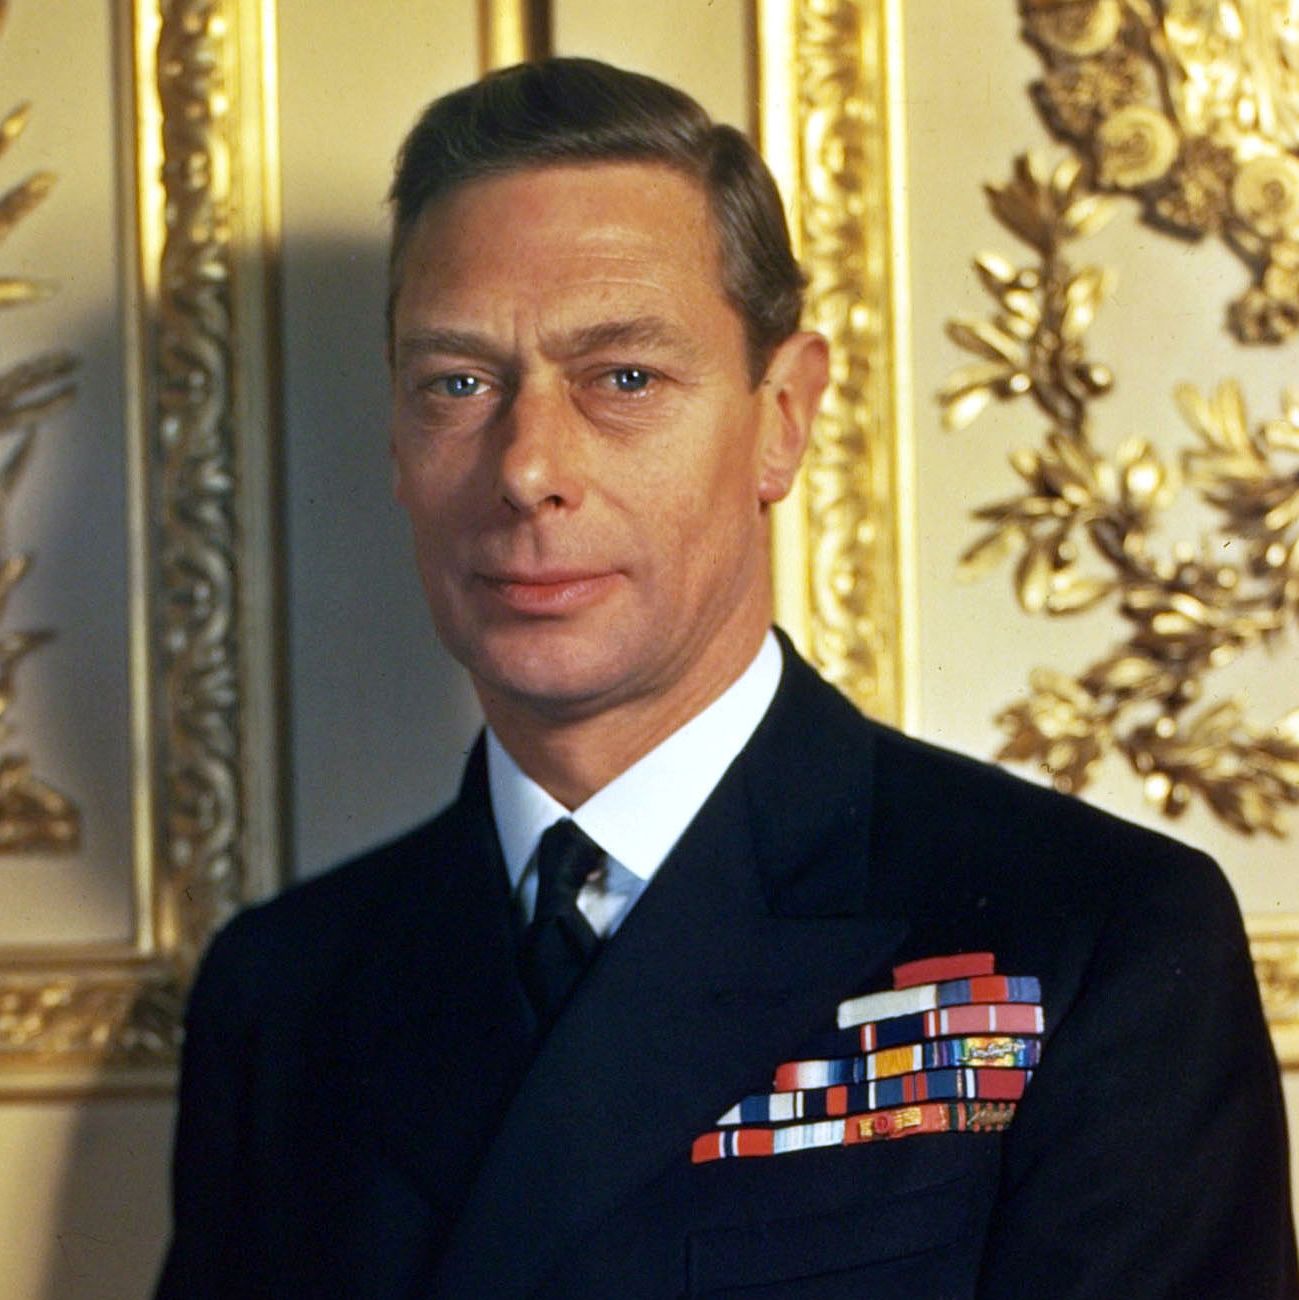 The Real King's Speech - King George VI - September 3, 1939 